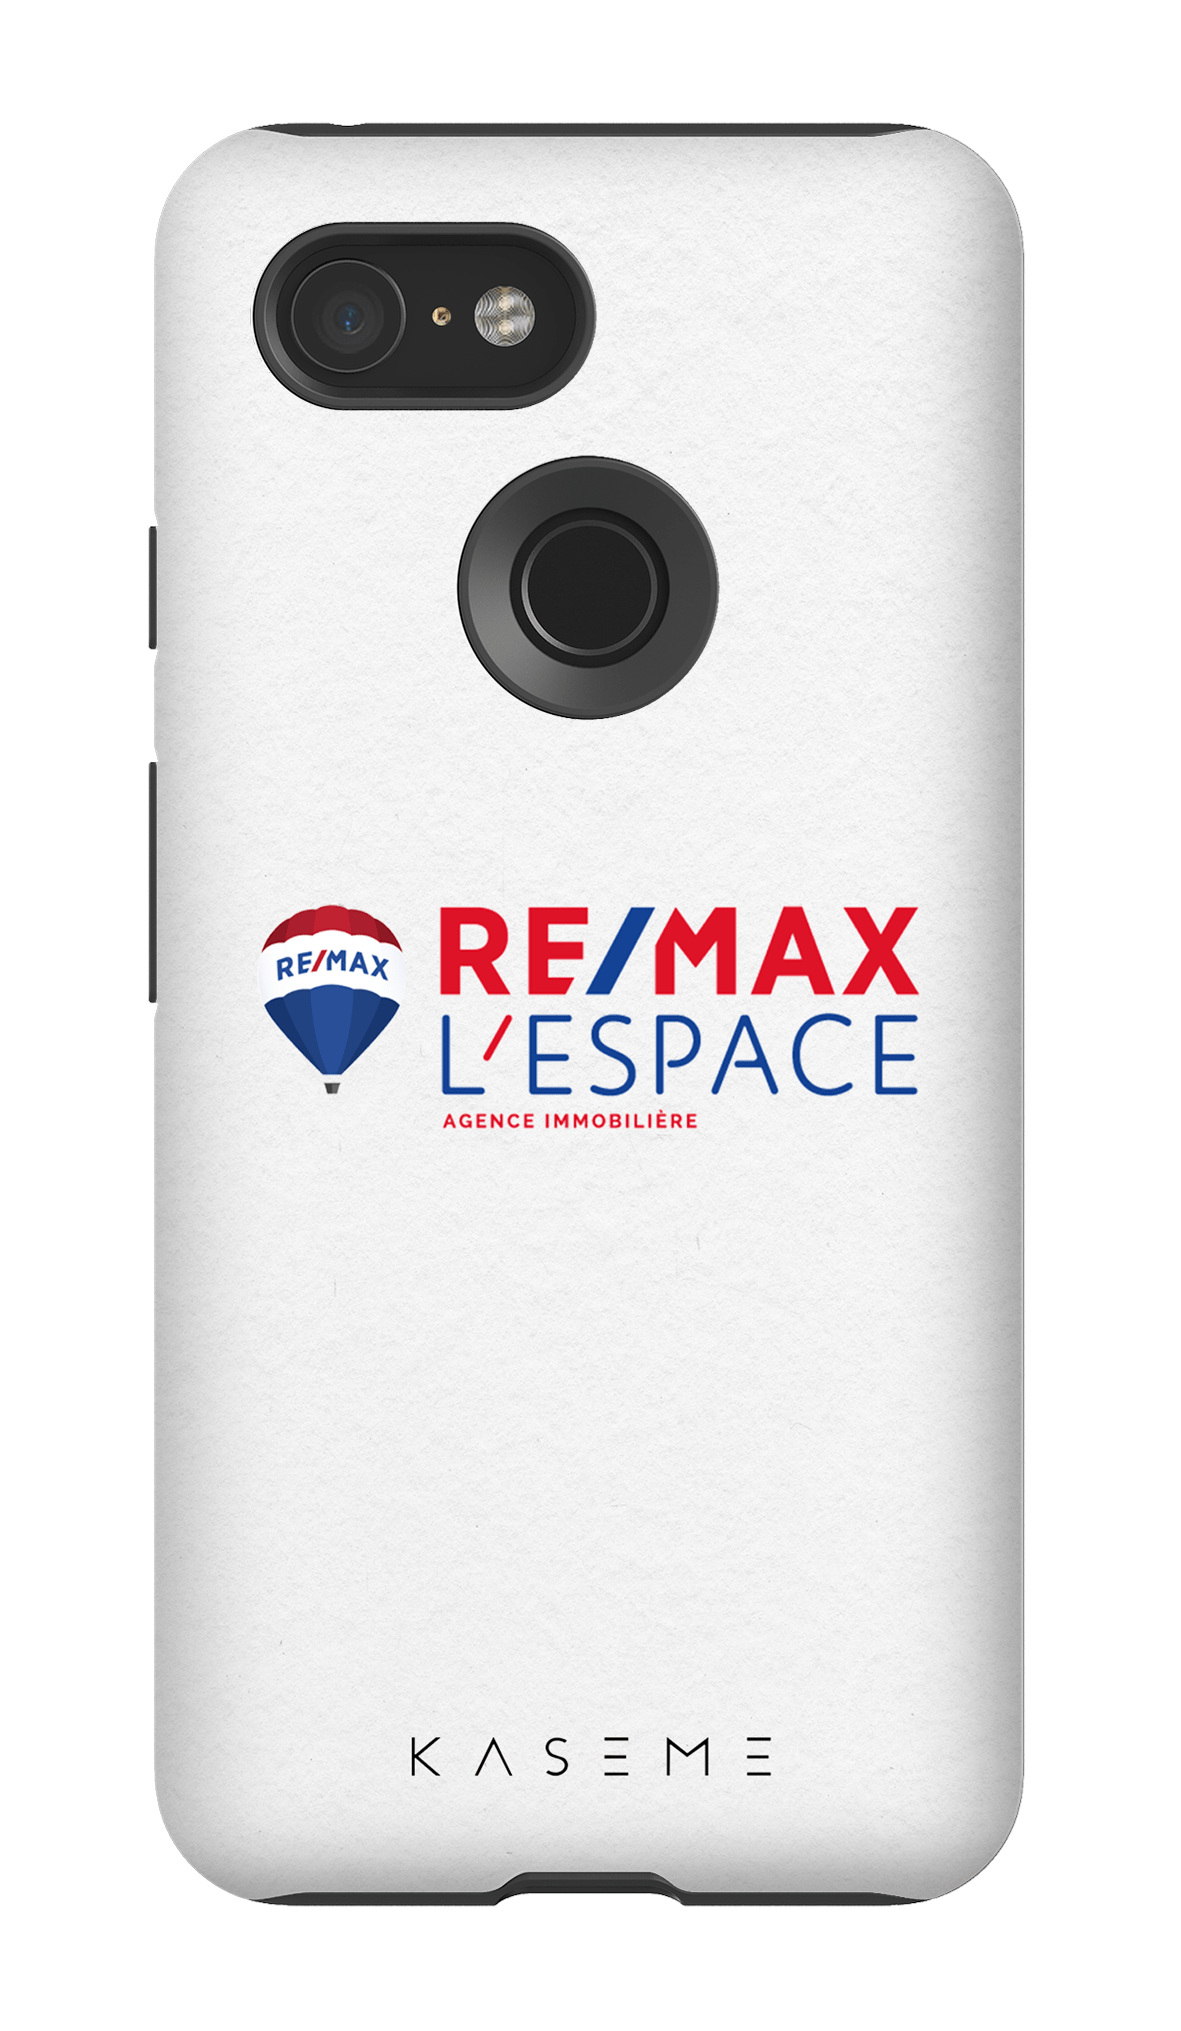 Remax L'Espace Blanc - Google Pixel 3